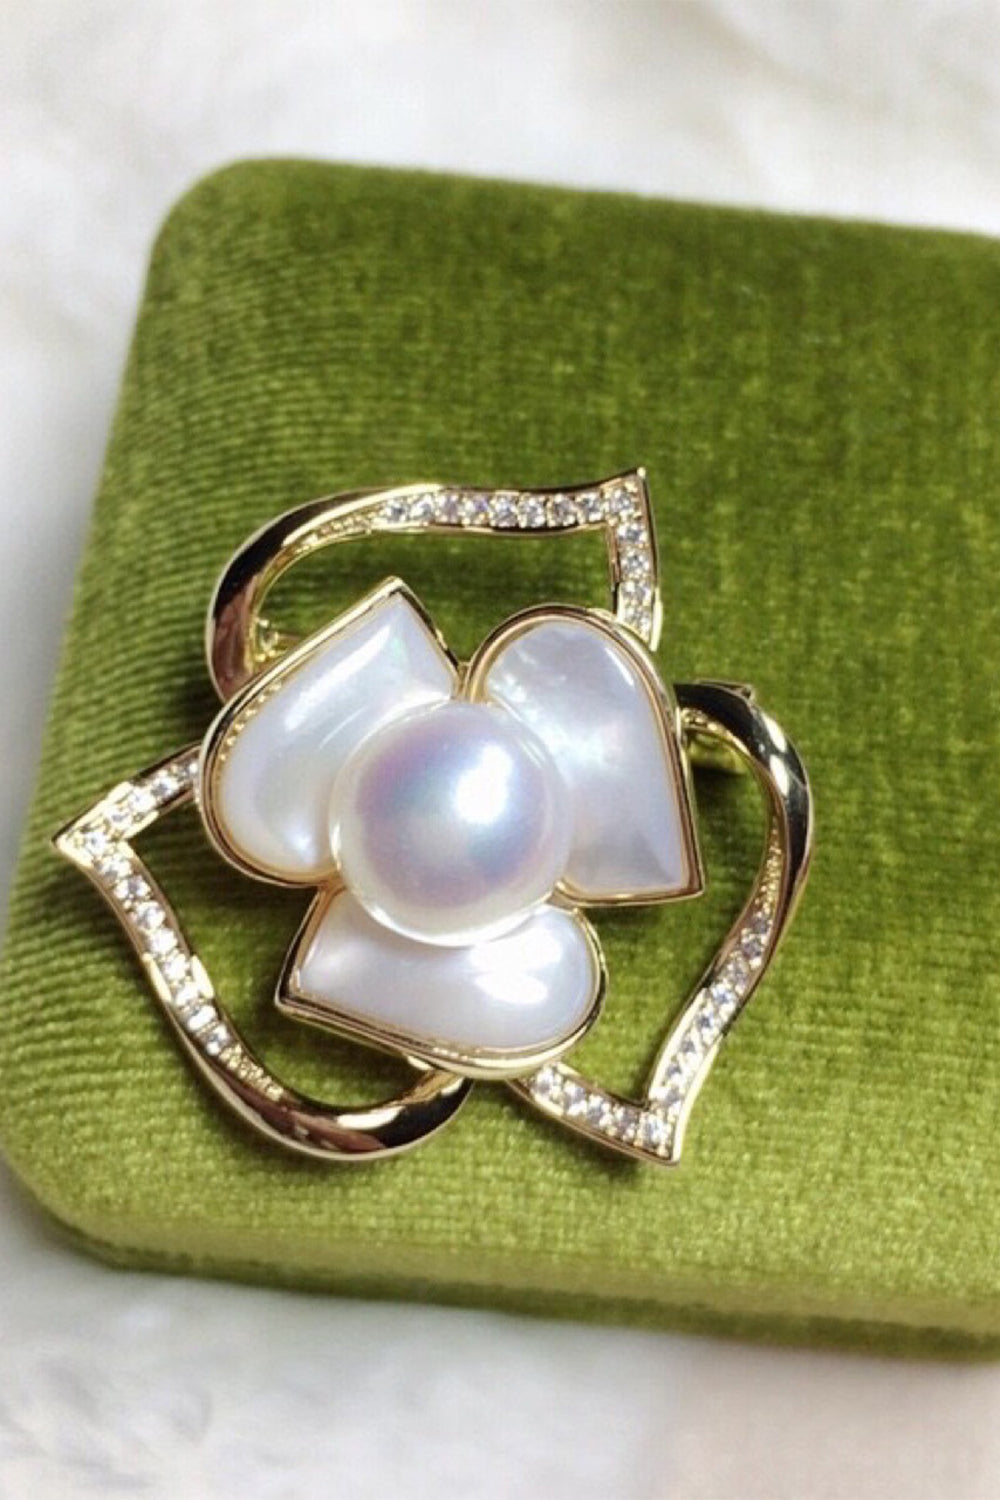 White Rhinestone & Pearls Brooch Wedding Party Jewelry